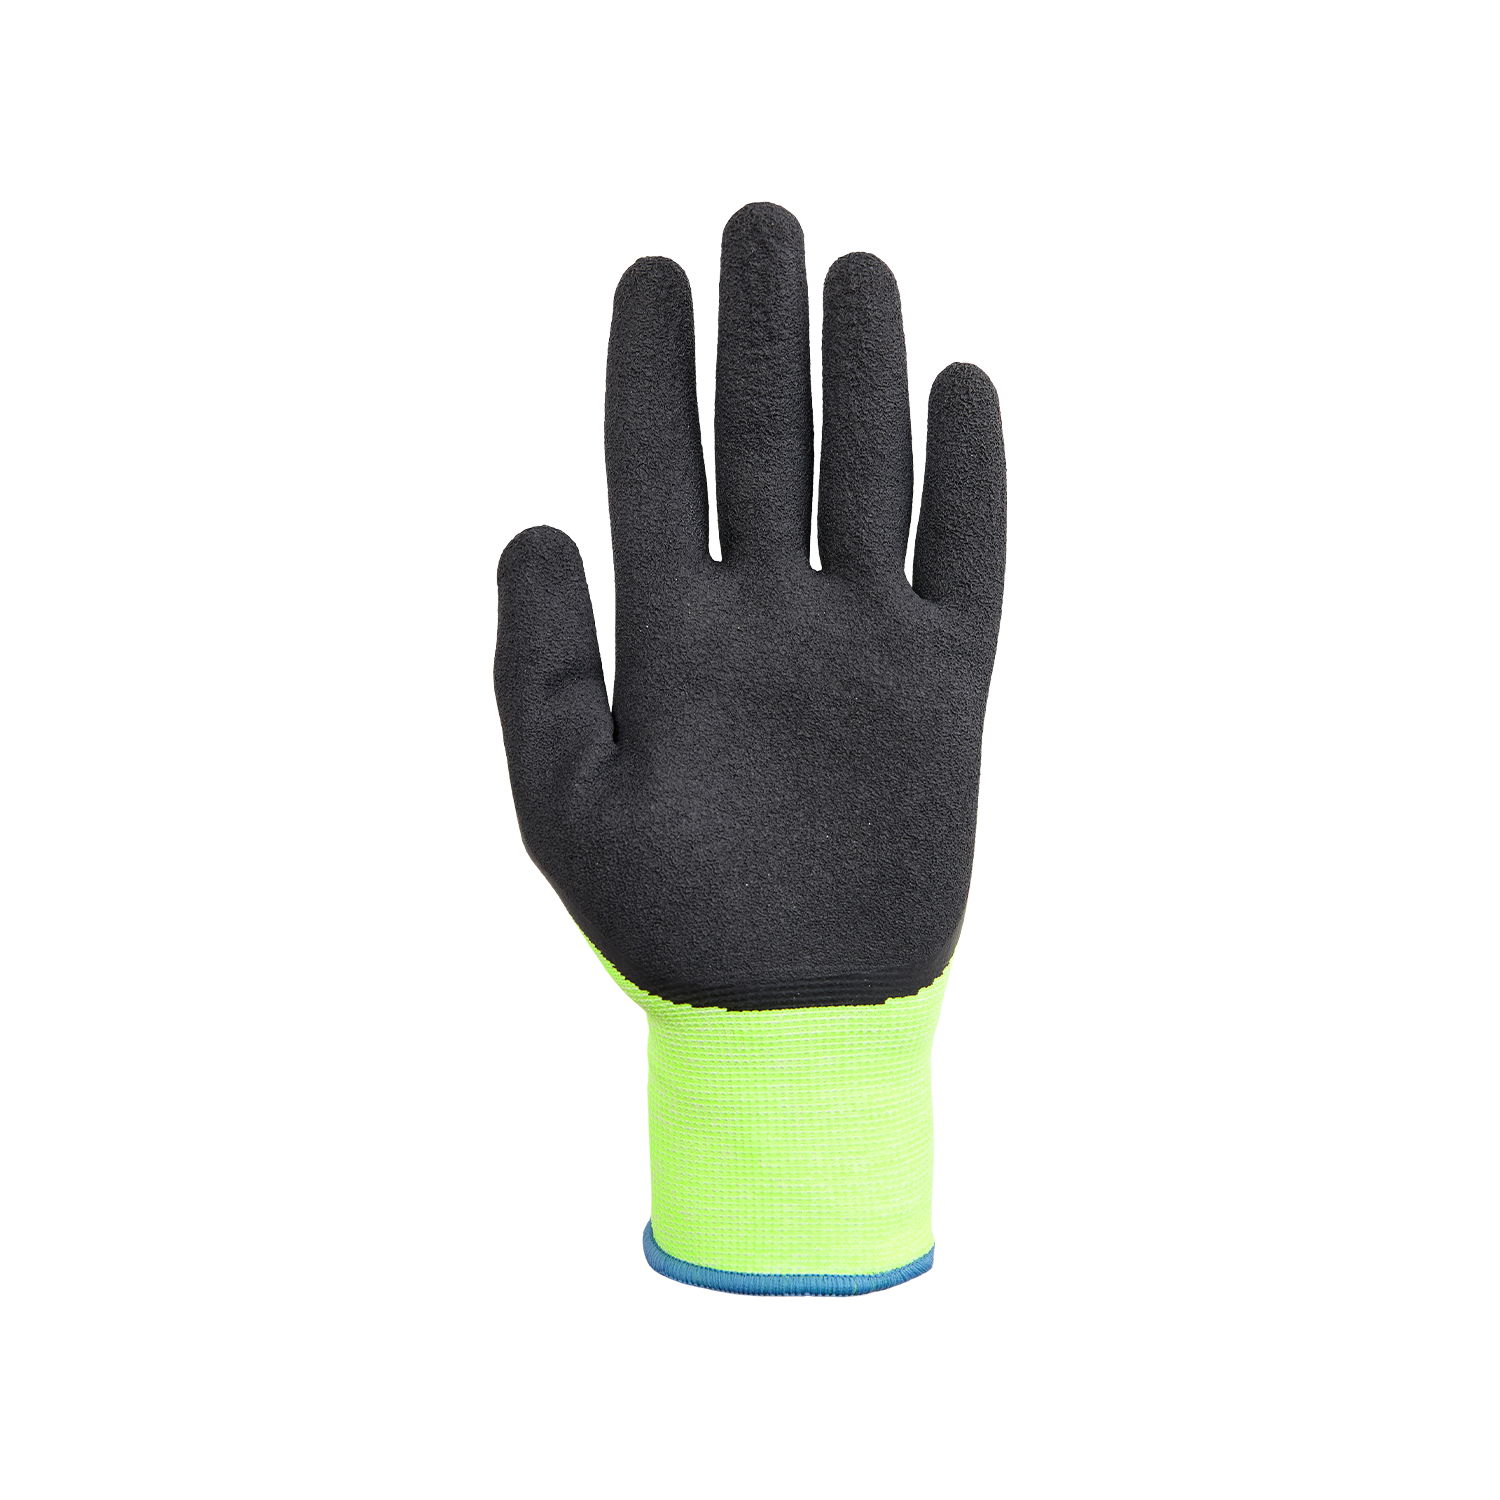 NORSE Eco Light assembly gloves size 10